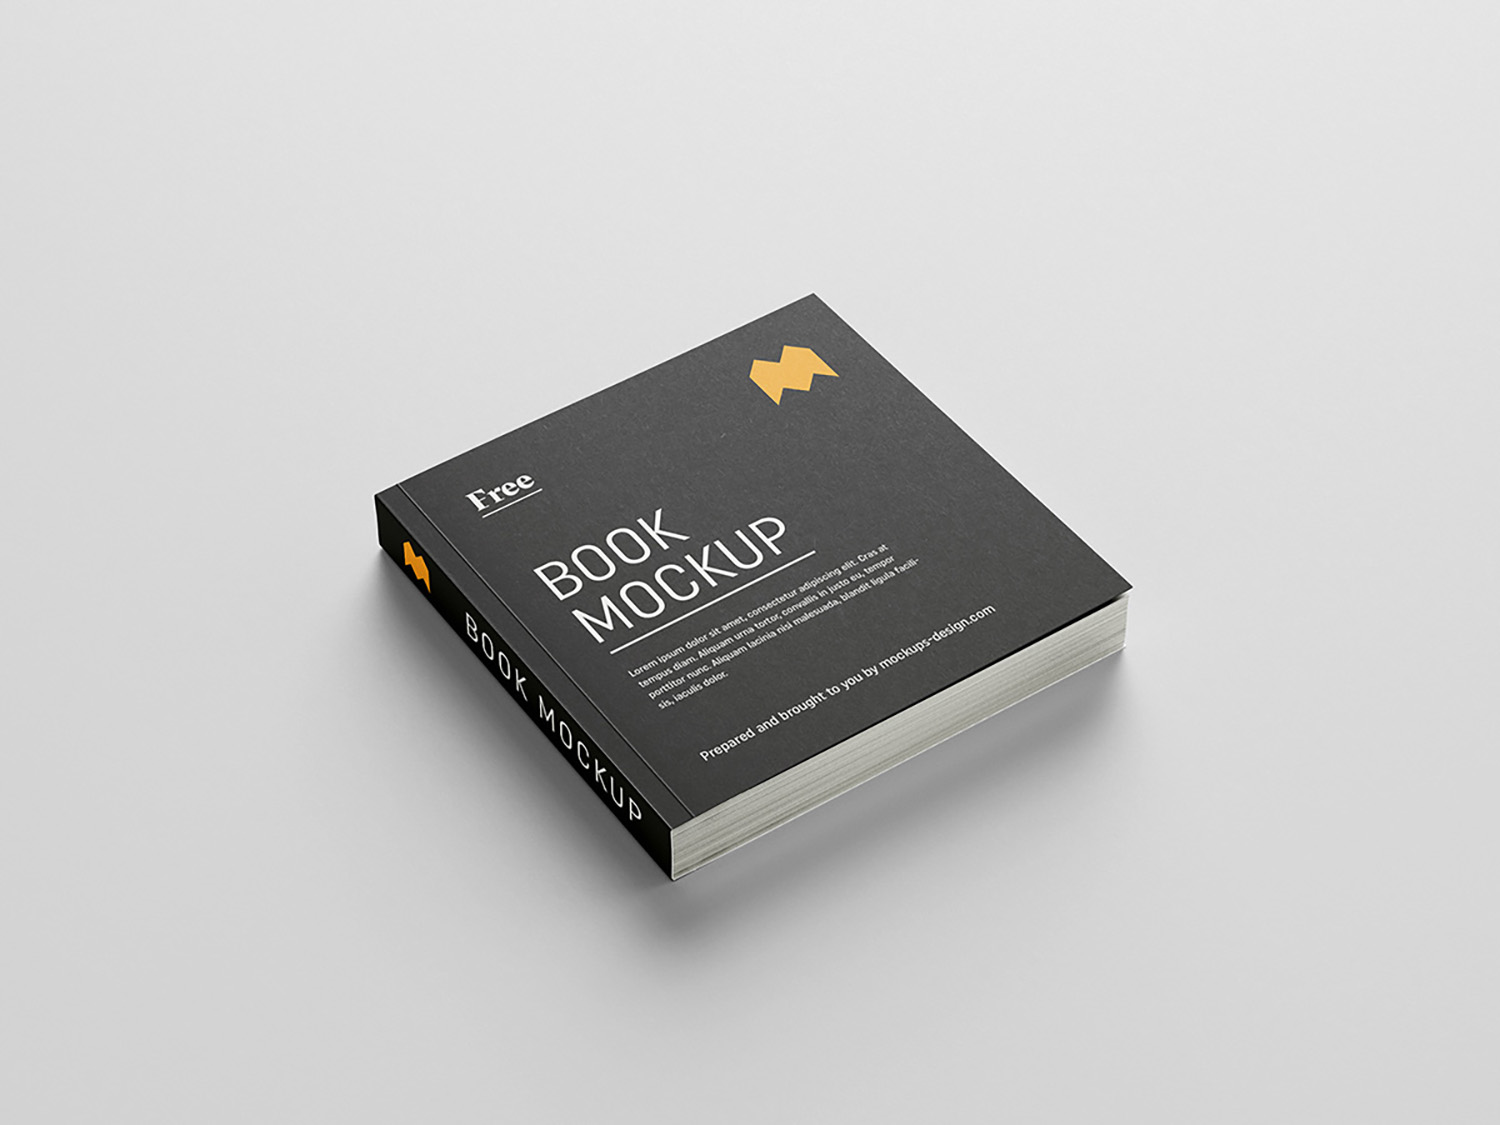 Free Square Book Mockup